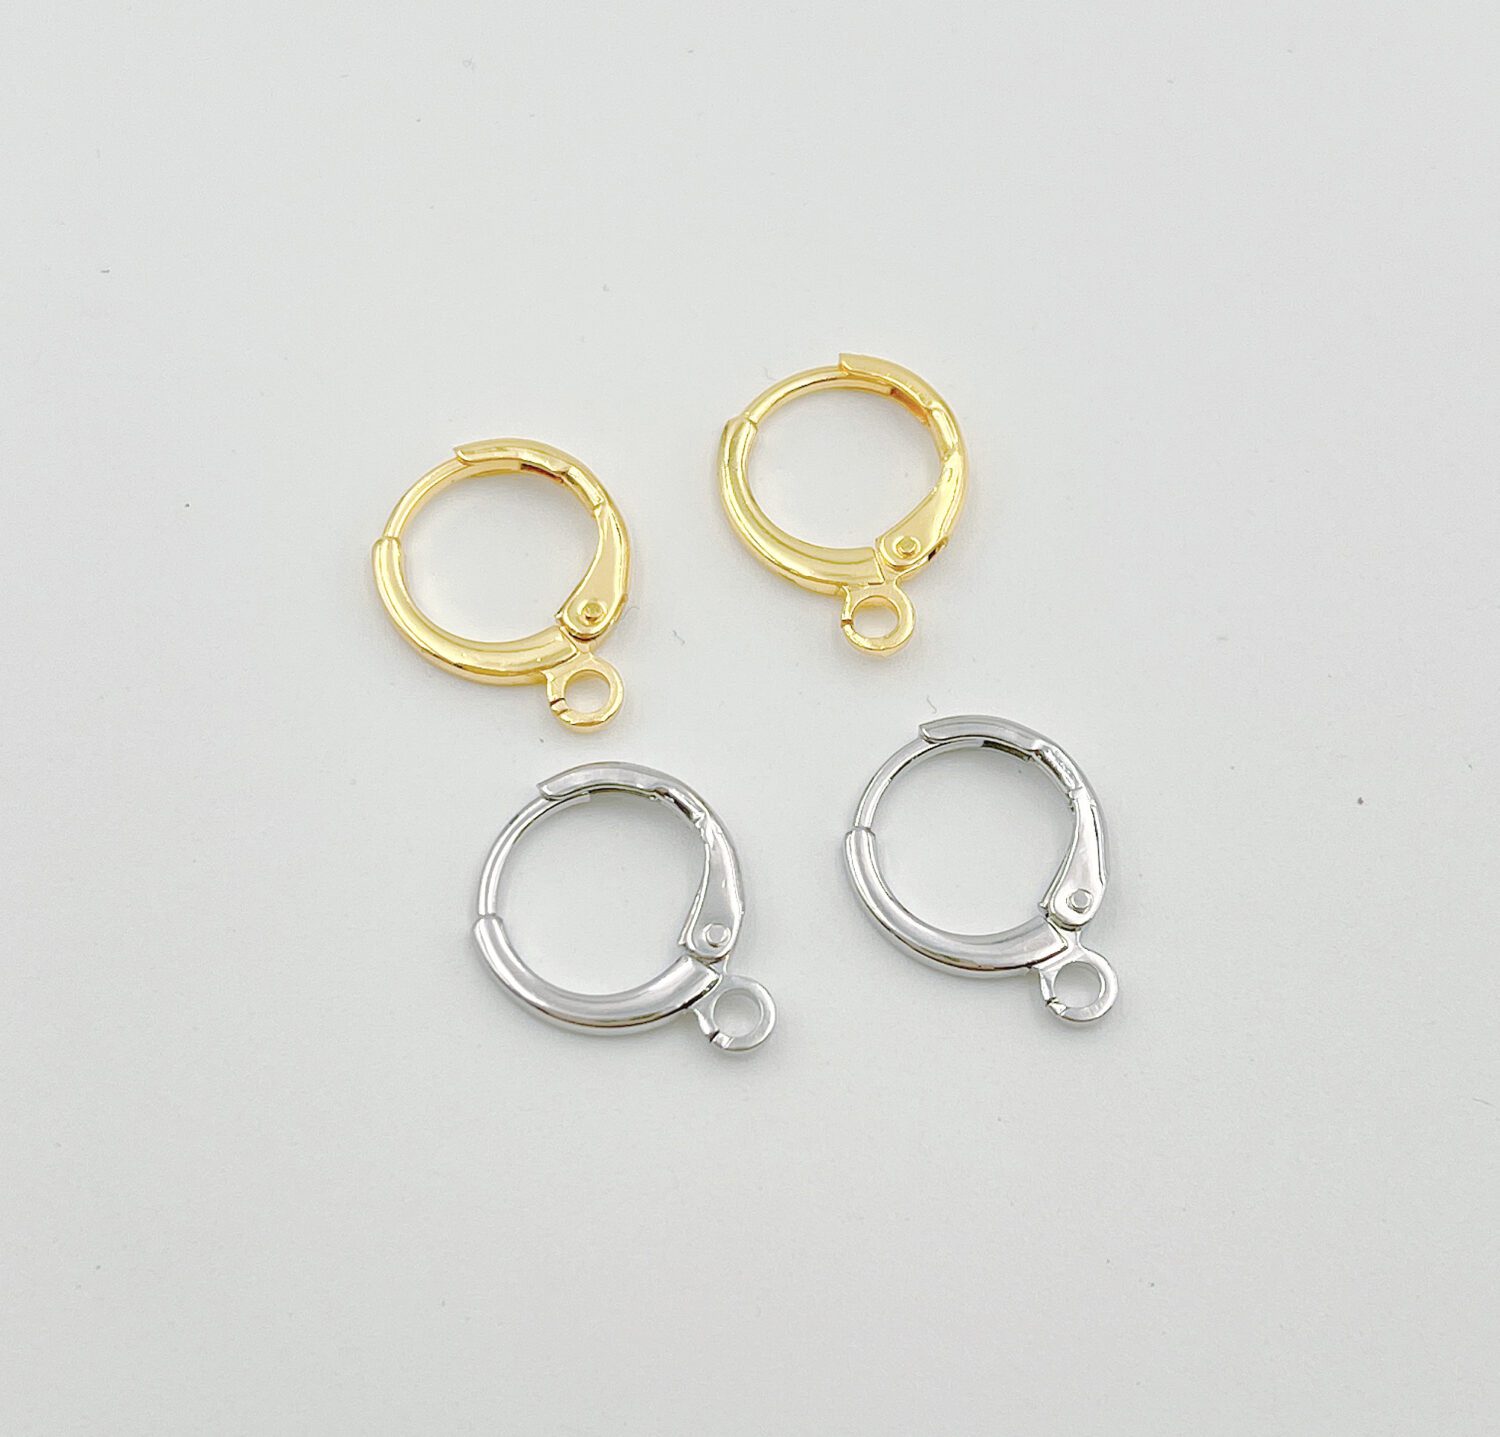 Details 125+ plain hoop earrings in bulk